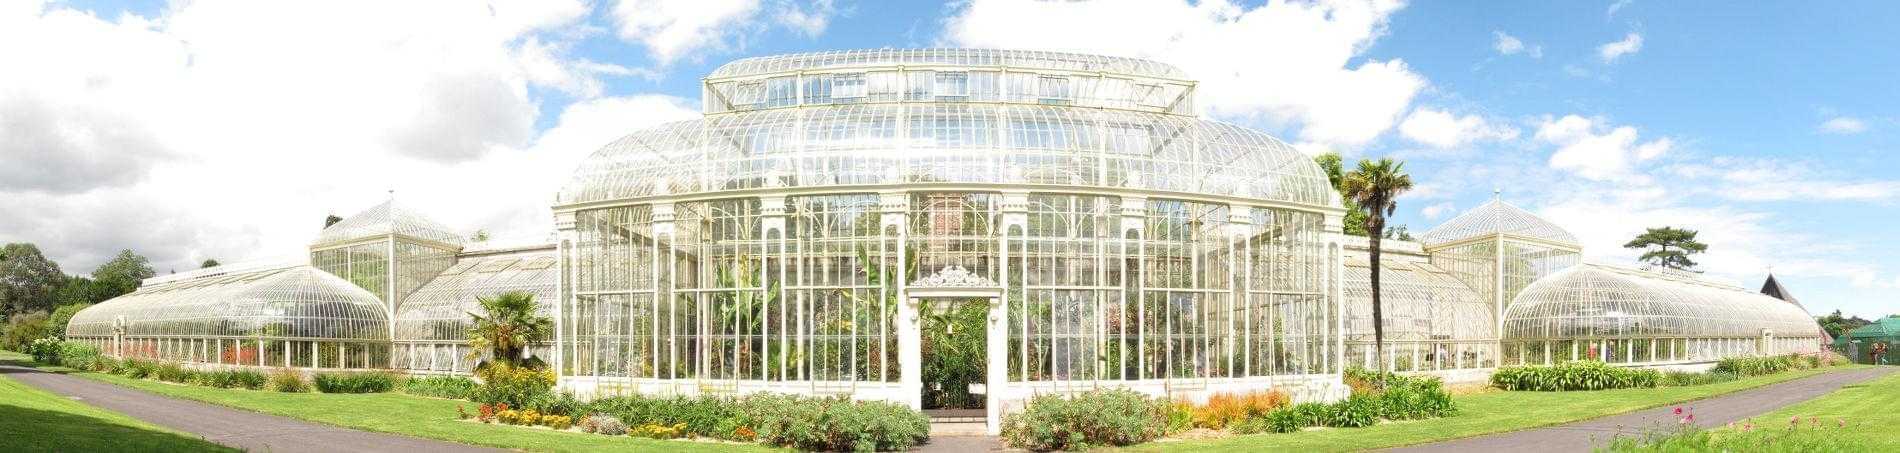 Greenhouse in Dublins botanic garden